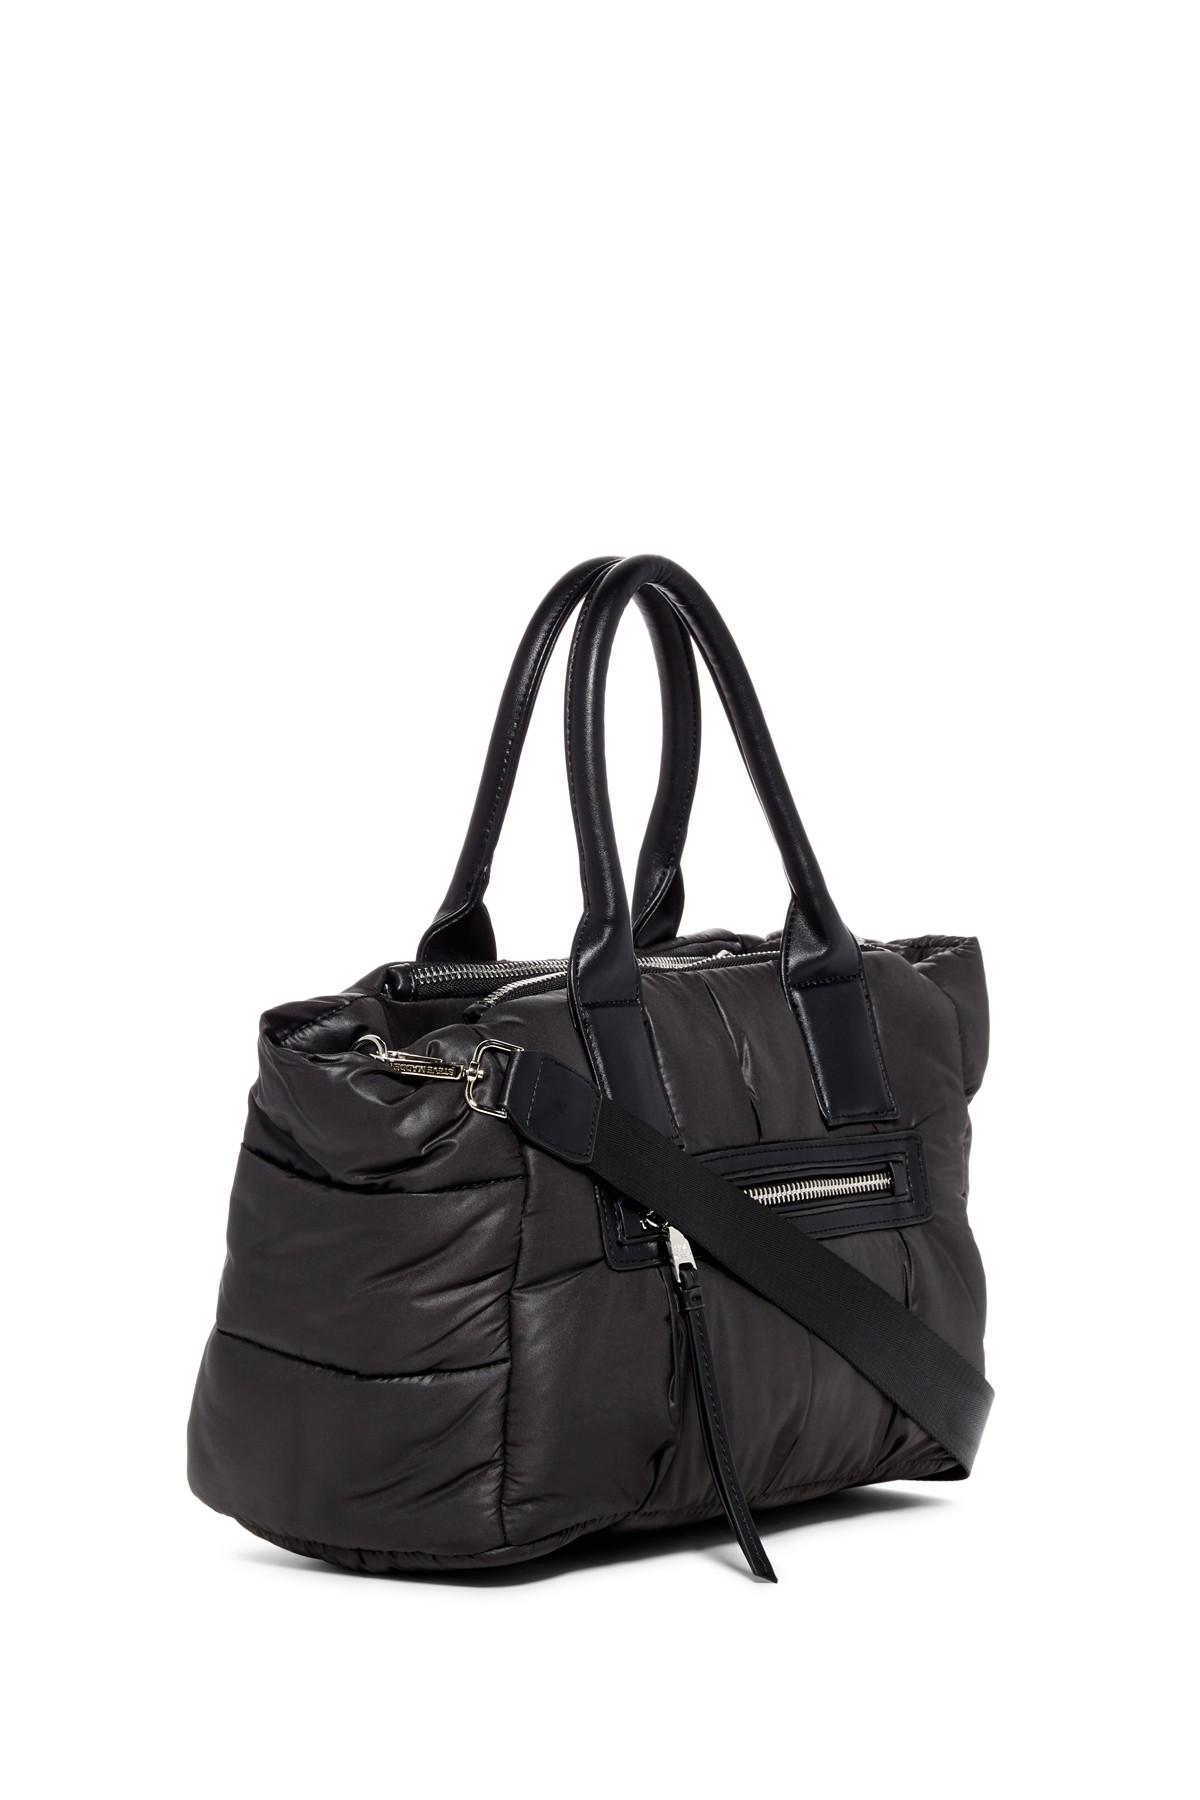 Buy STEVE MADDEN Black Bspeedy PU Zipper Closure Women's Tote Handbag